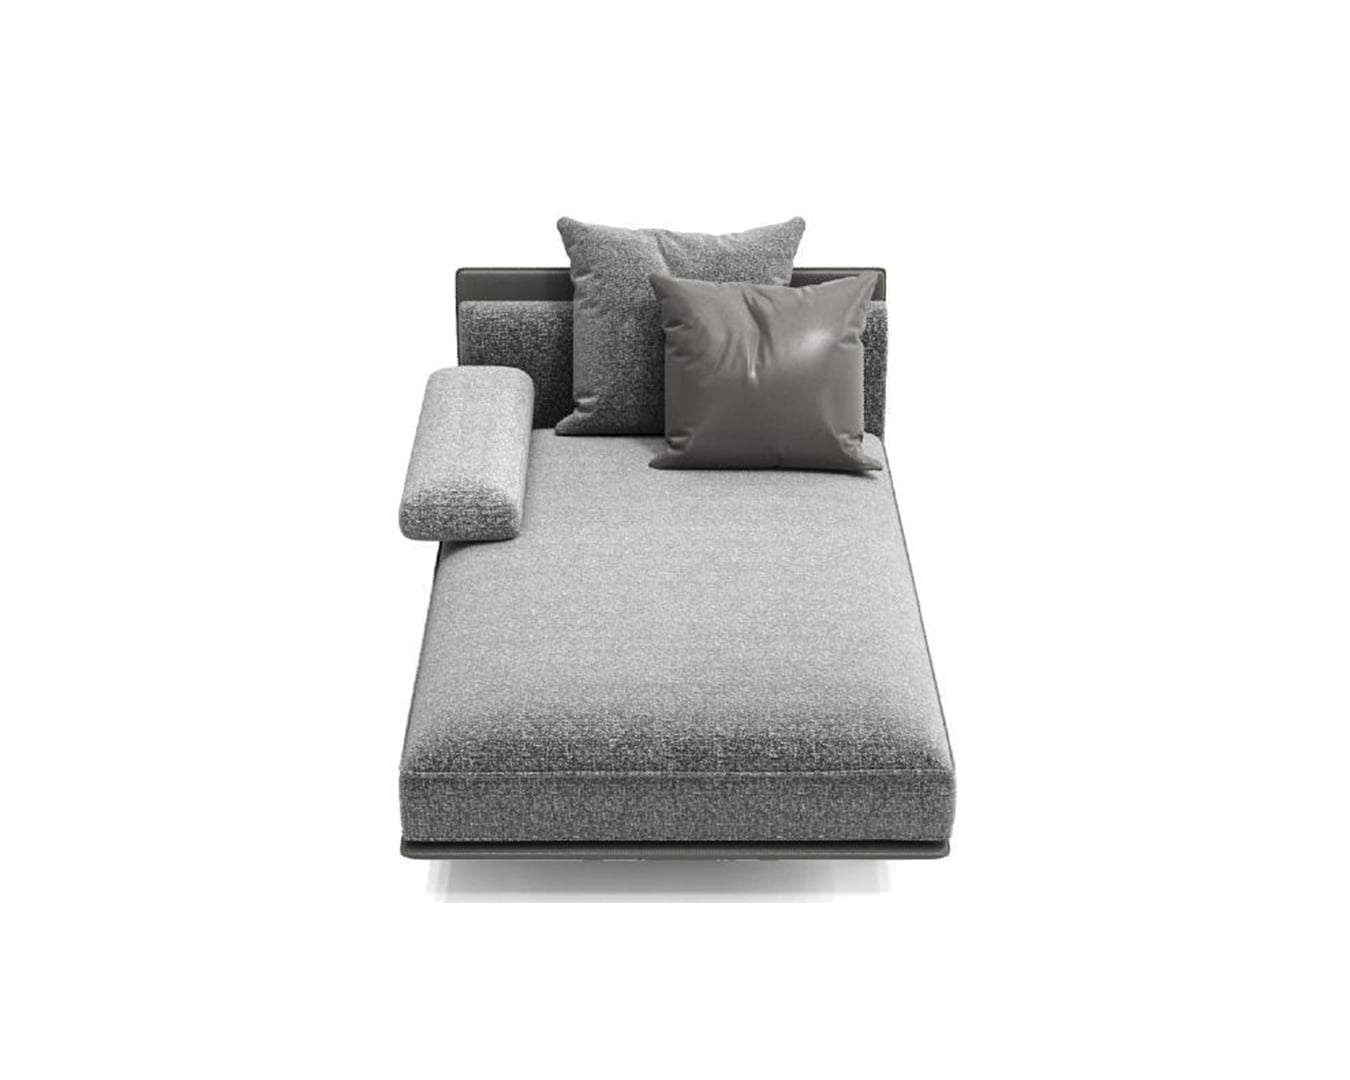 Sofa modern minimalis set grey left couch